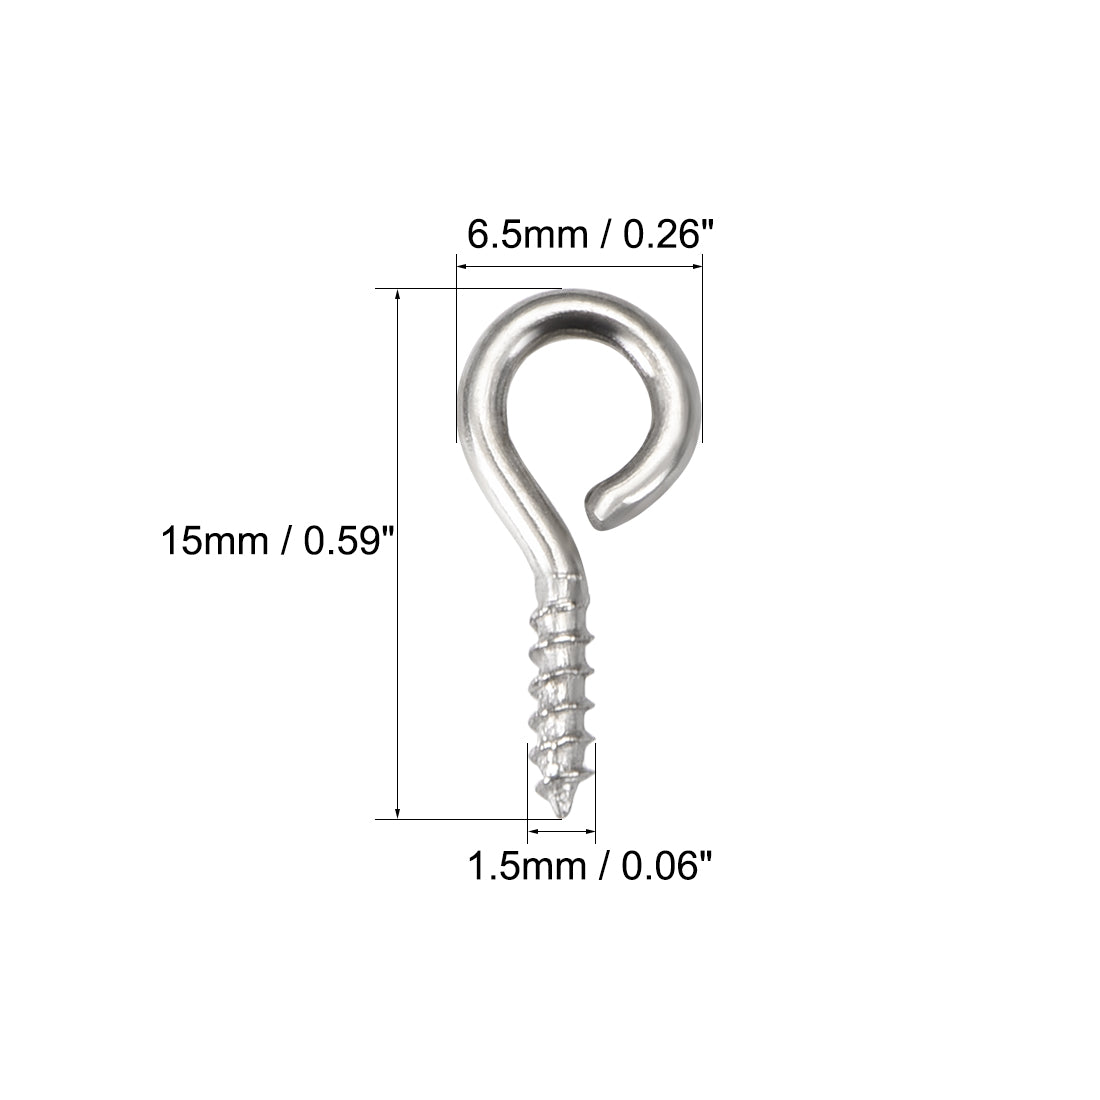 uxcell Uxcell 0.59" Small Screw Eye Hooks Self Tapping Screws Carbon Steel Screw-in Hanger Eye-Shape Ring Hooks Silver 100pcs